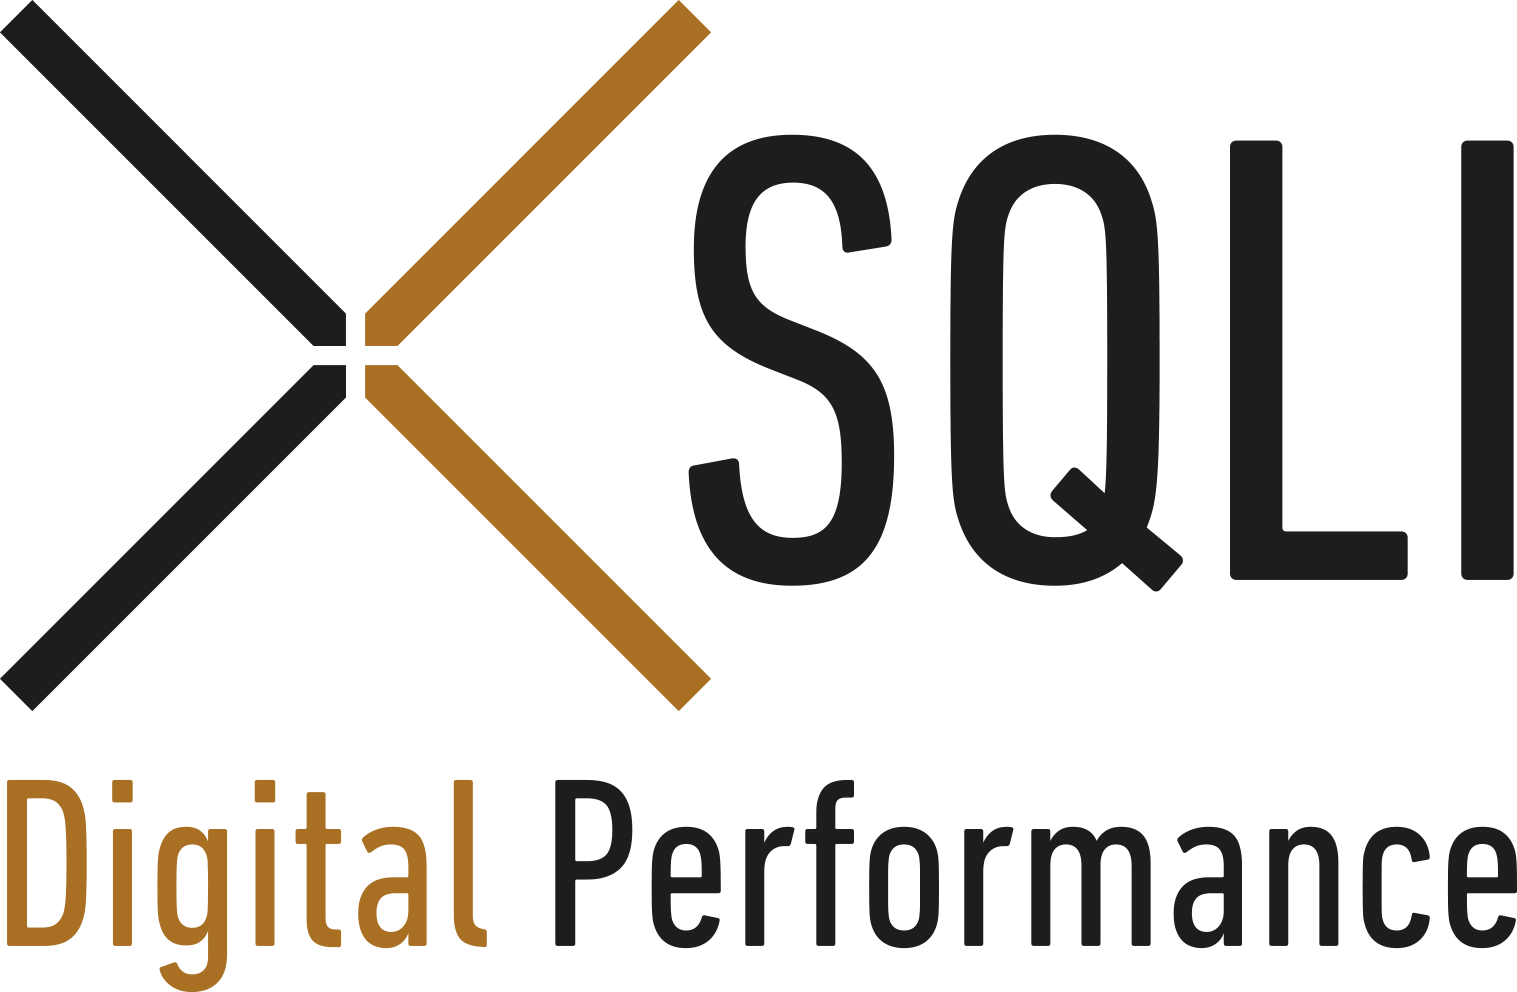 SQLI Digital Performance